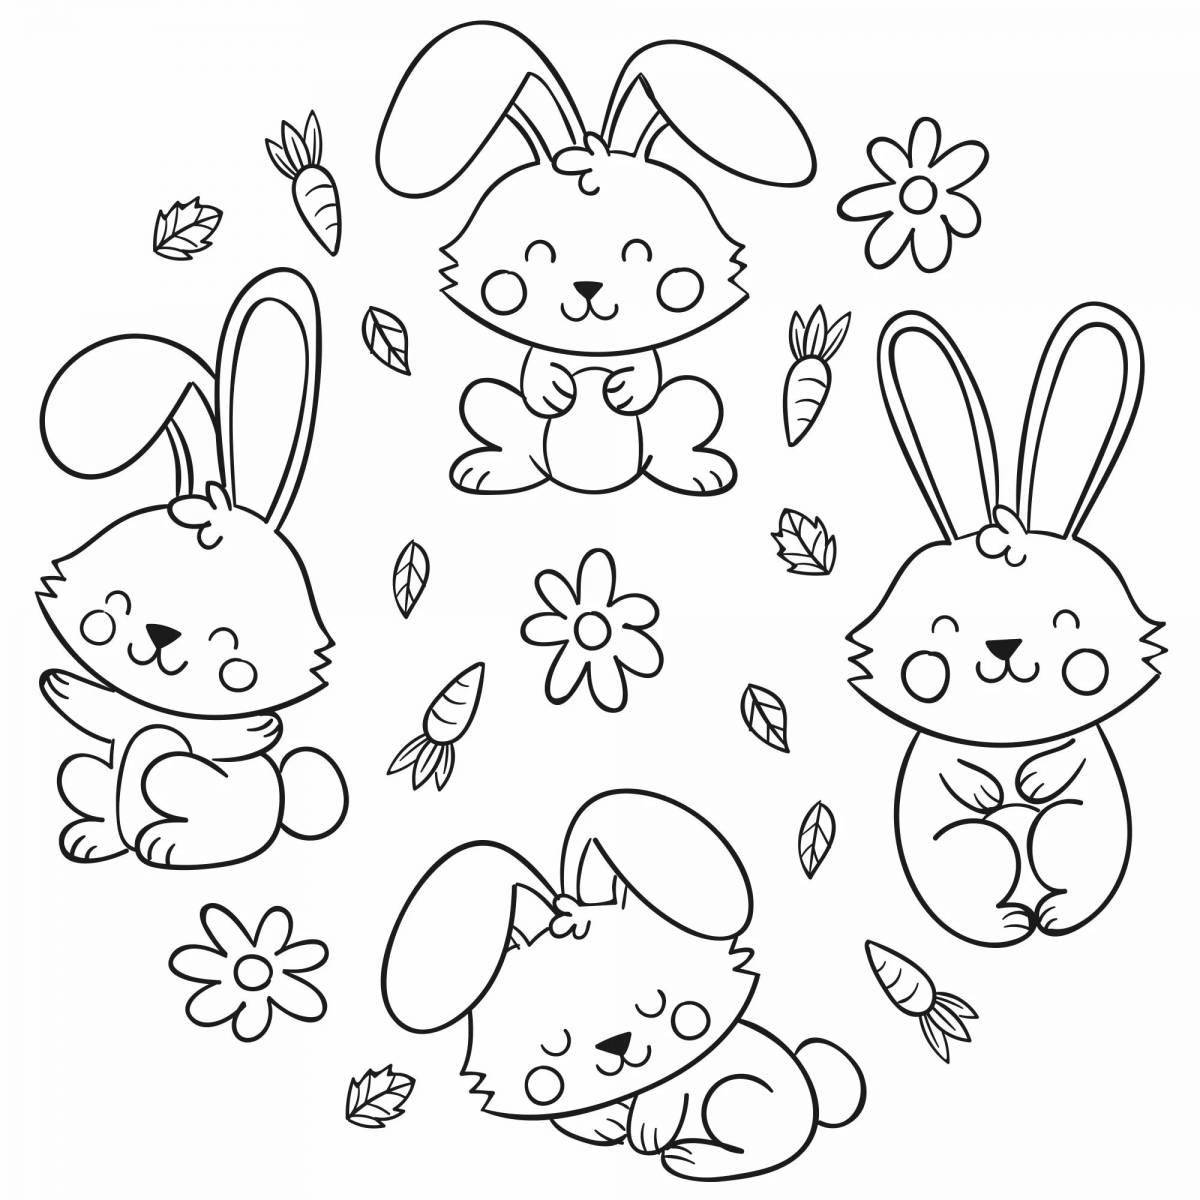 Nimble bunny coloring book